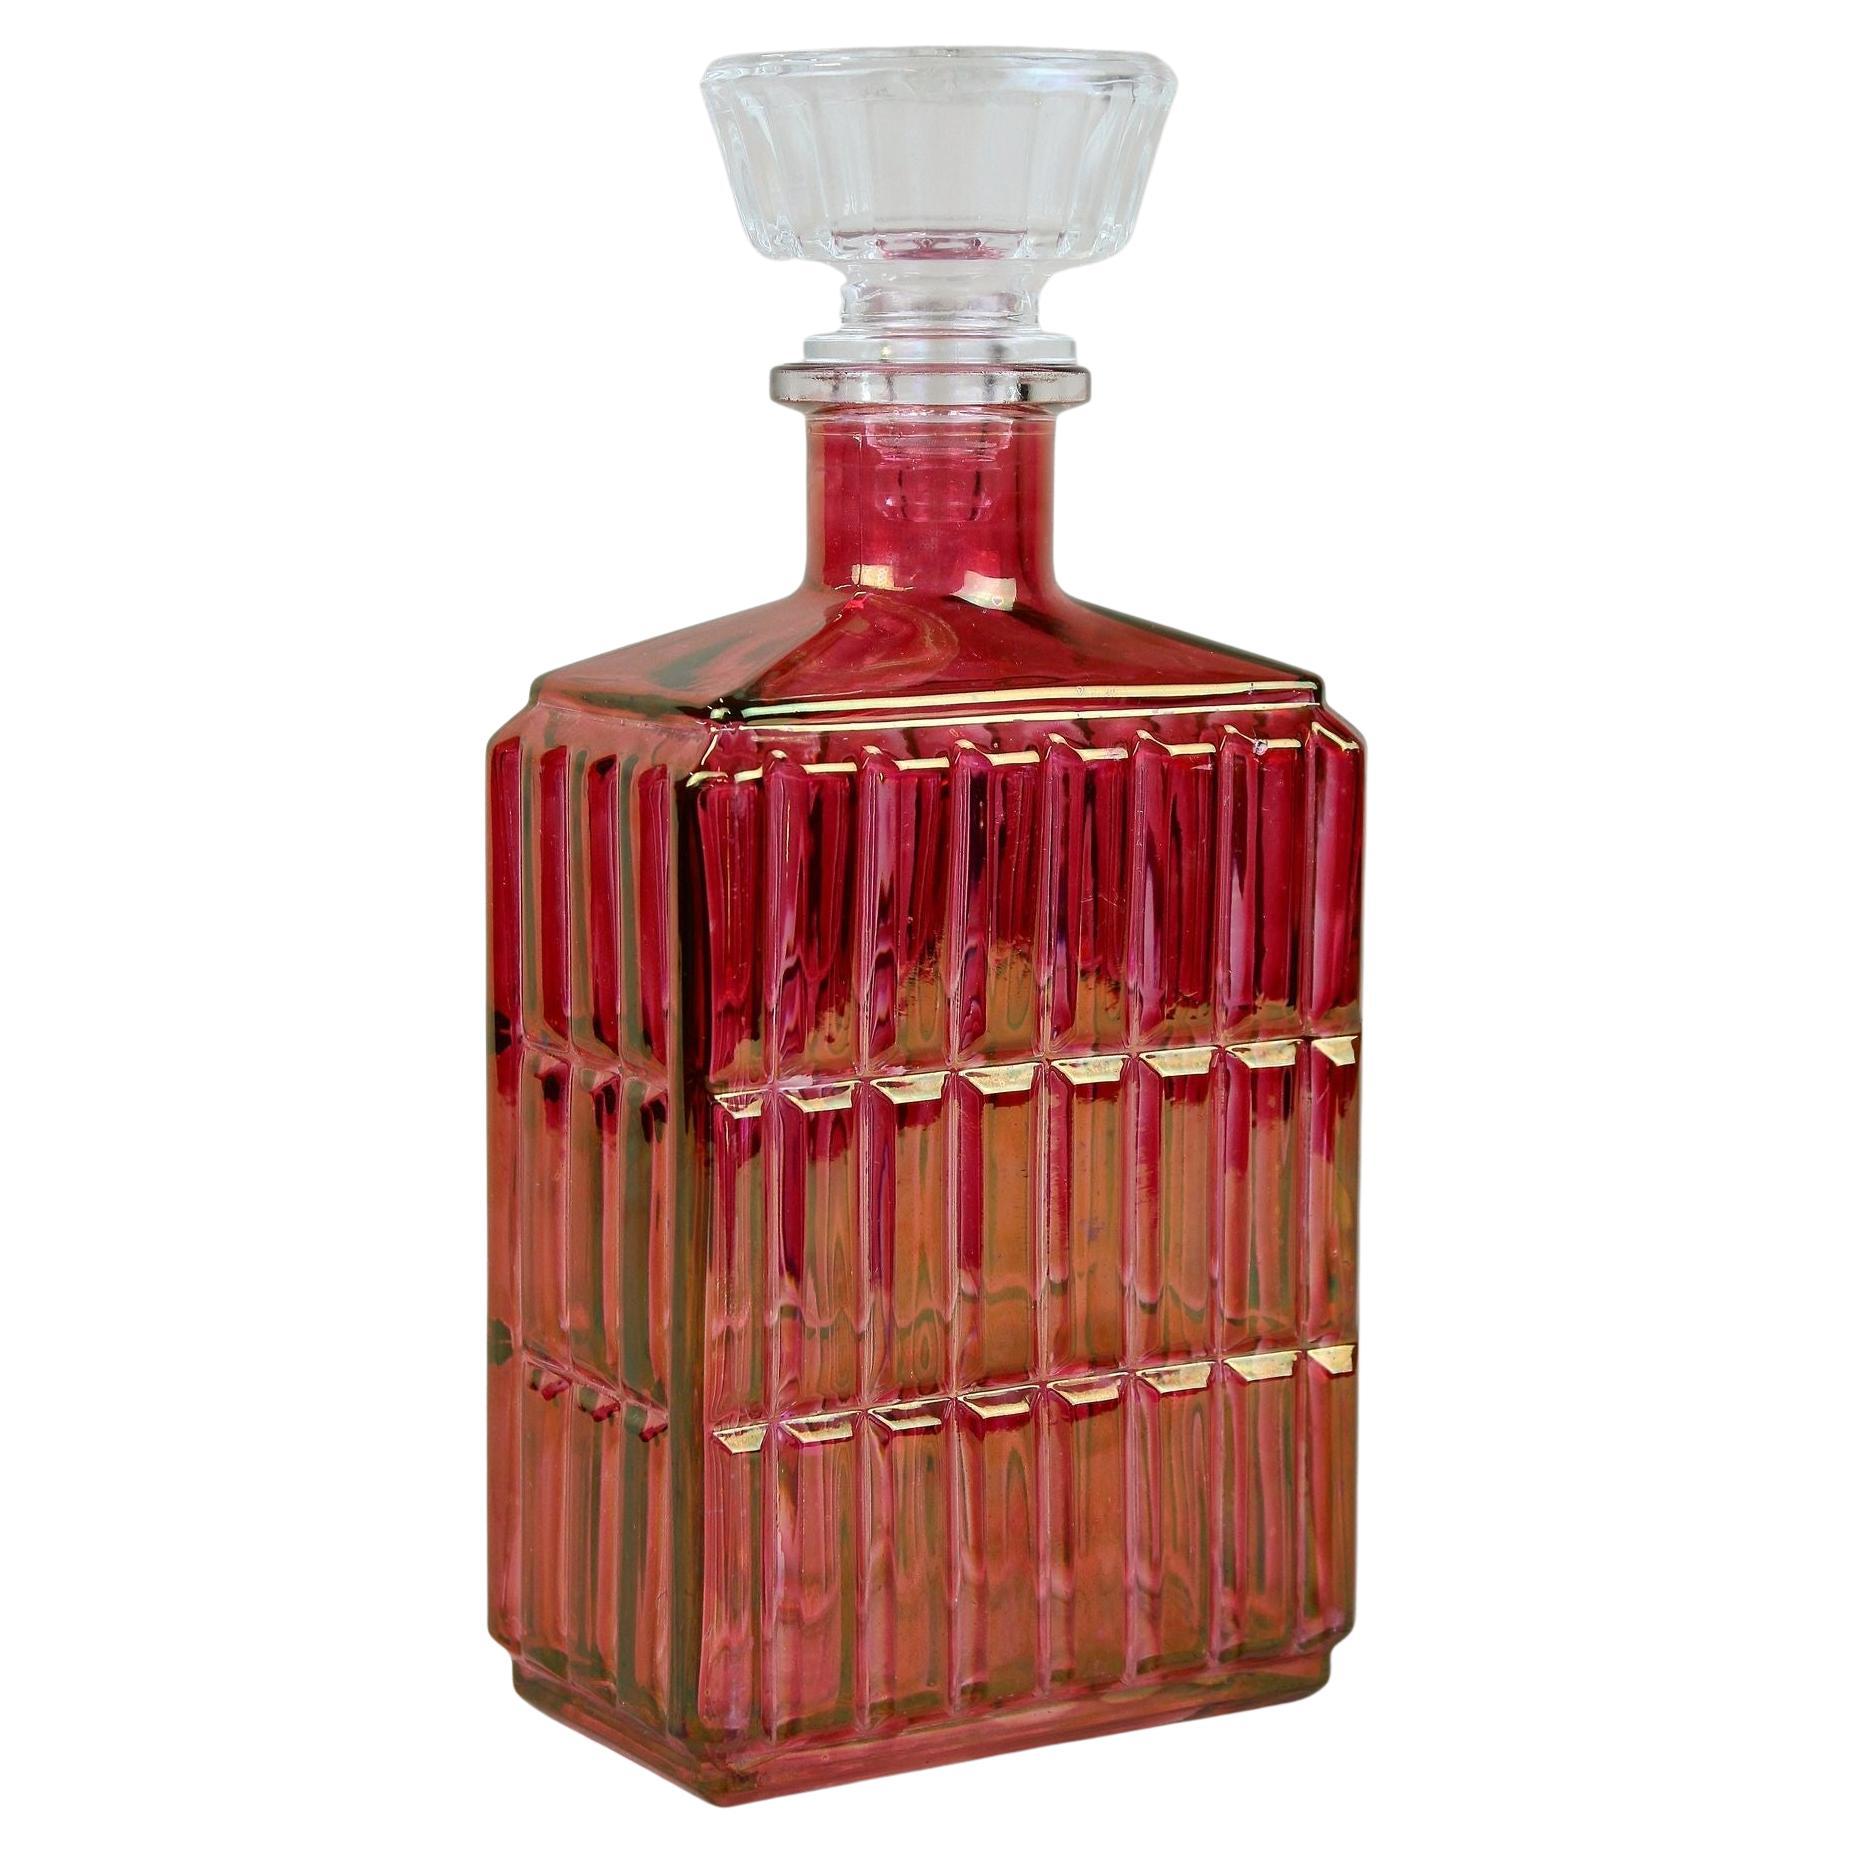 20th Century Art Deco Glass Decanter or Liquor Bottle, Austria ca. 1930 For Sale